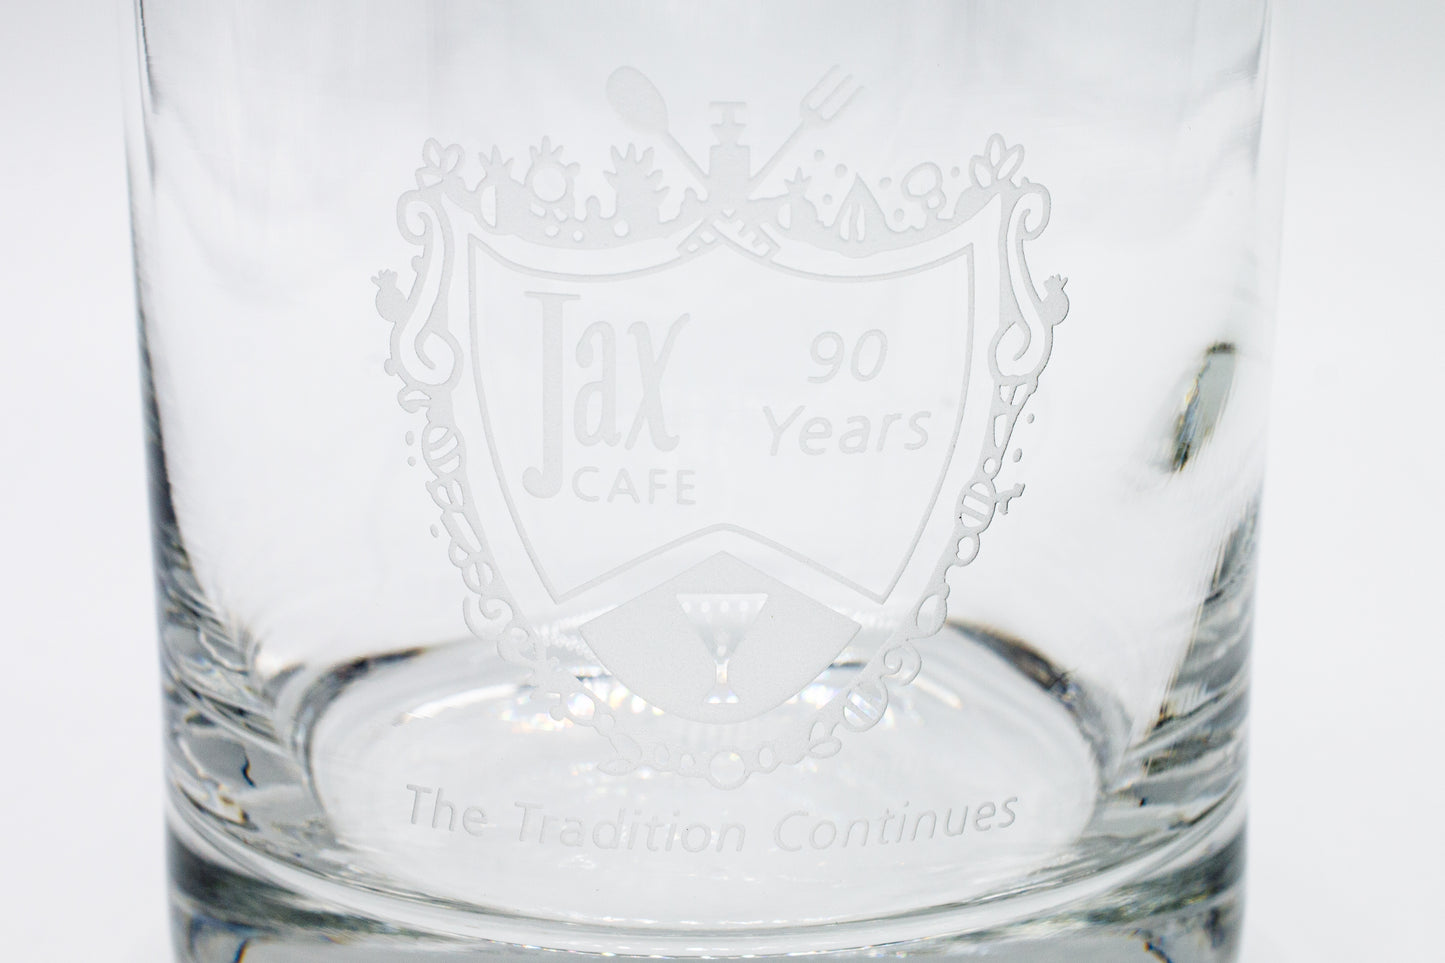 Jax 90th Anniversary Cocktail Glasses